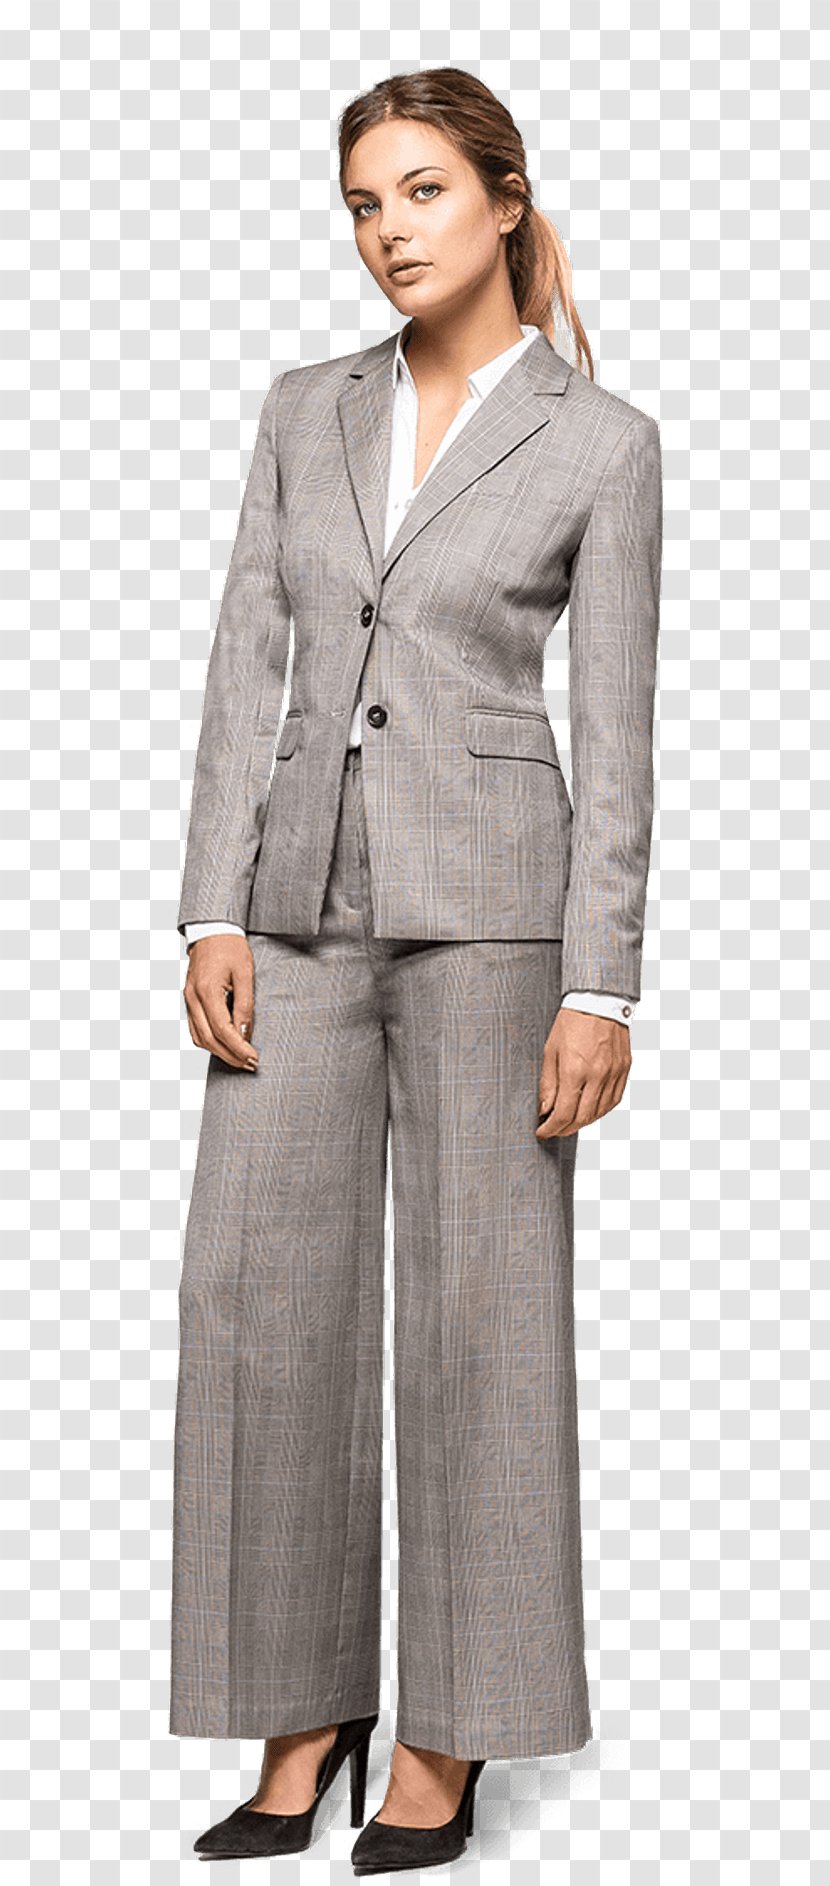 Blazer - Sleeve - Grey Suit Transparent PNG